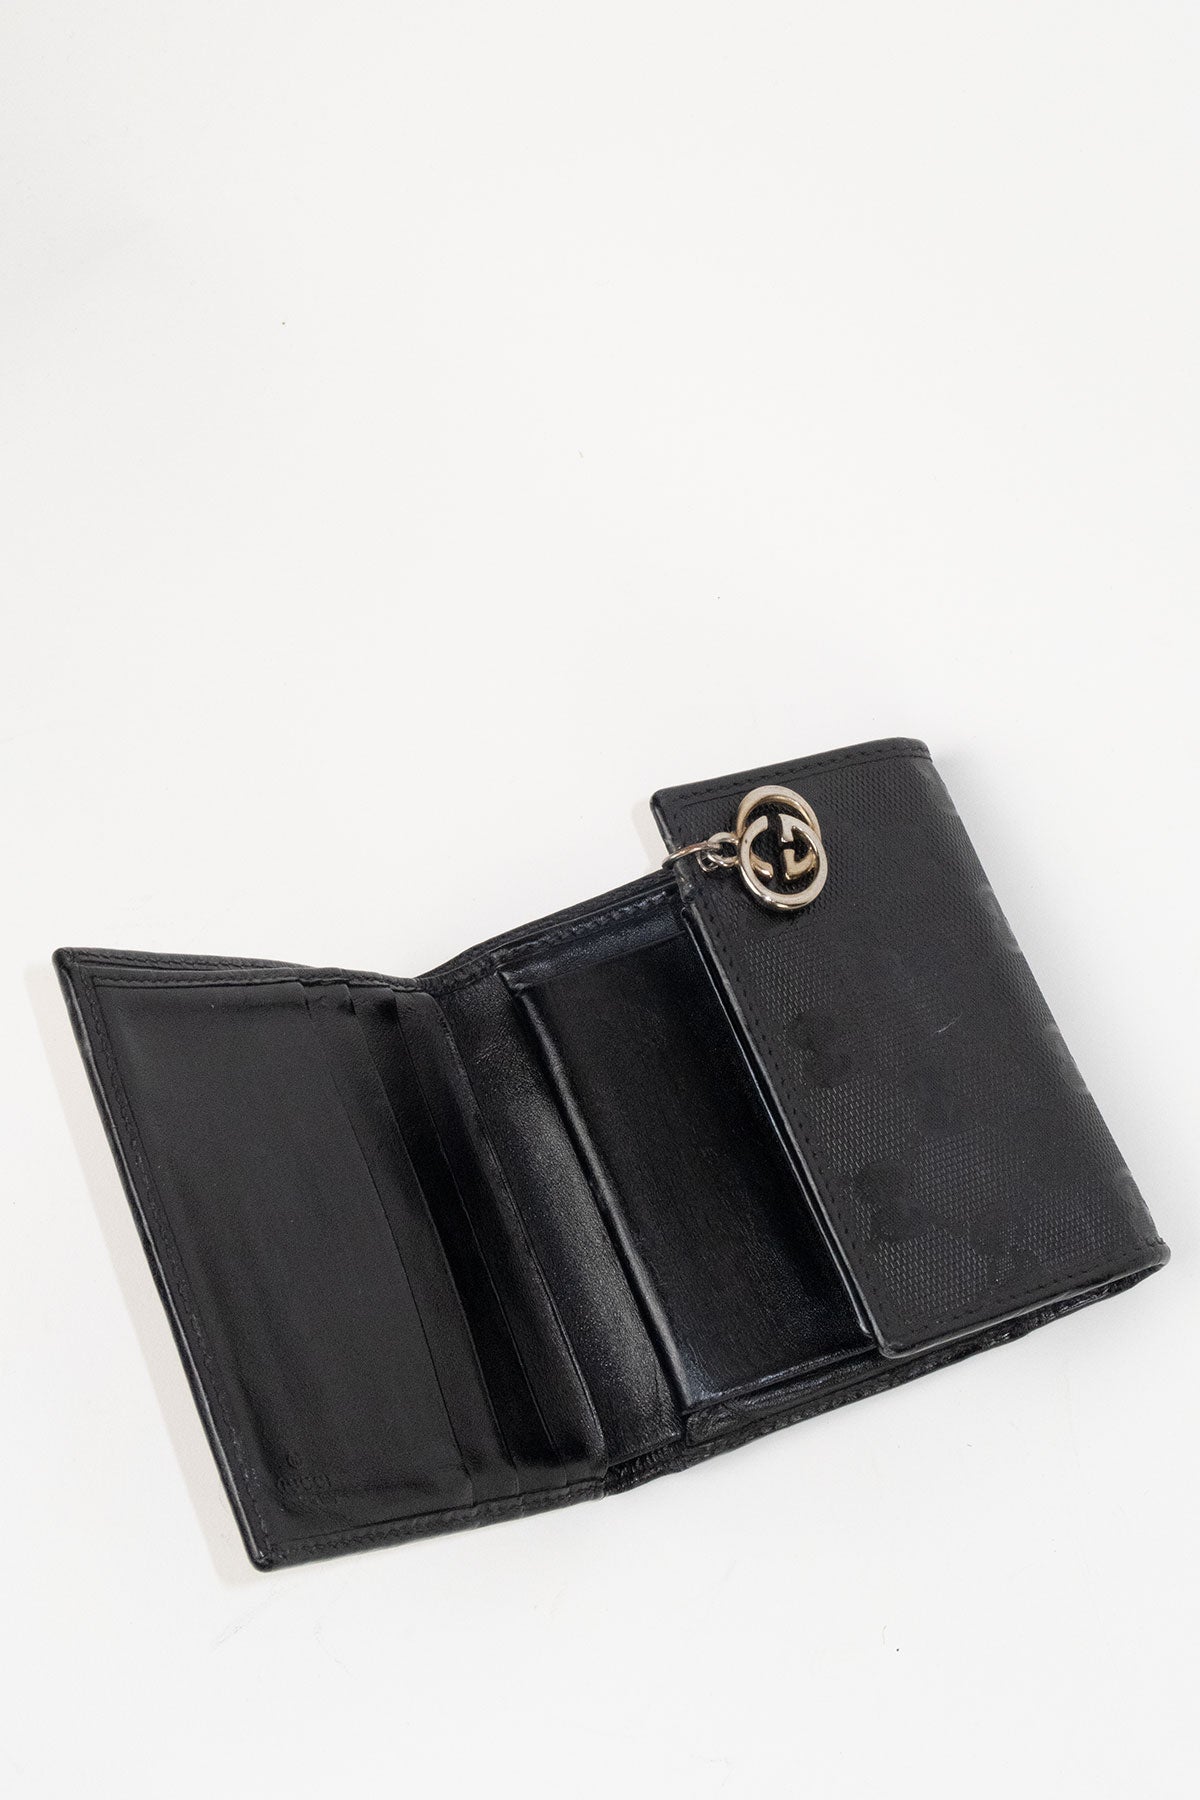 Vintage Gucci Black GG Canvas Trifold Wallet - Jade Vintage